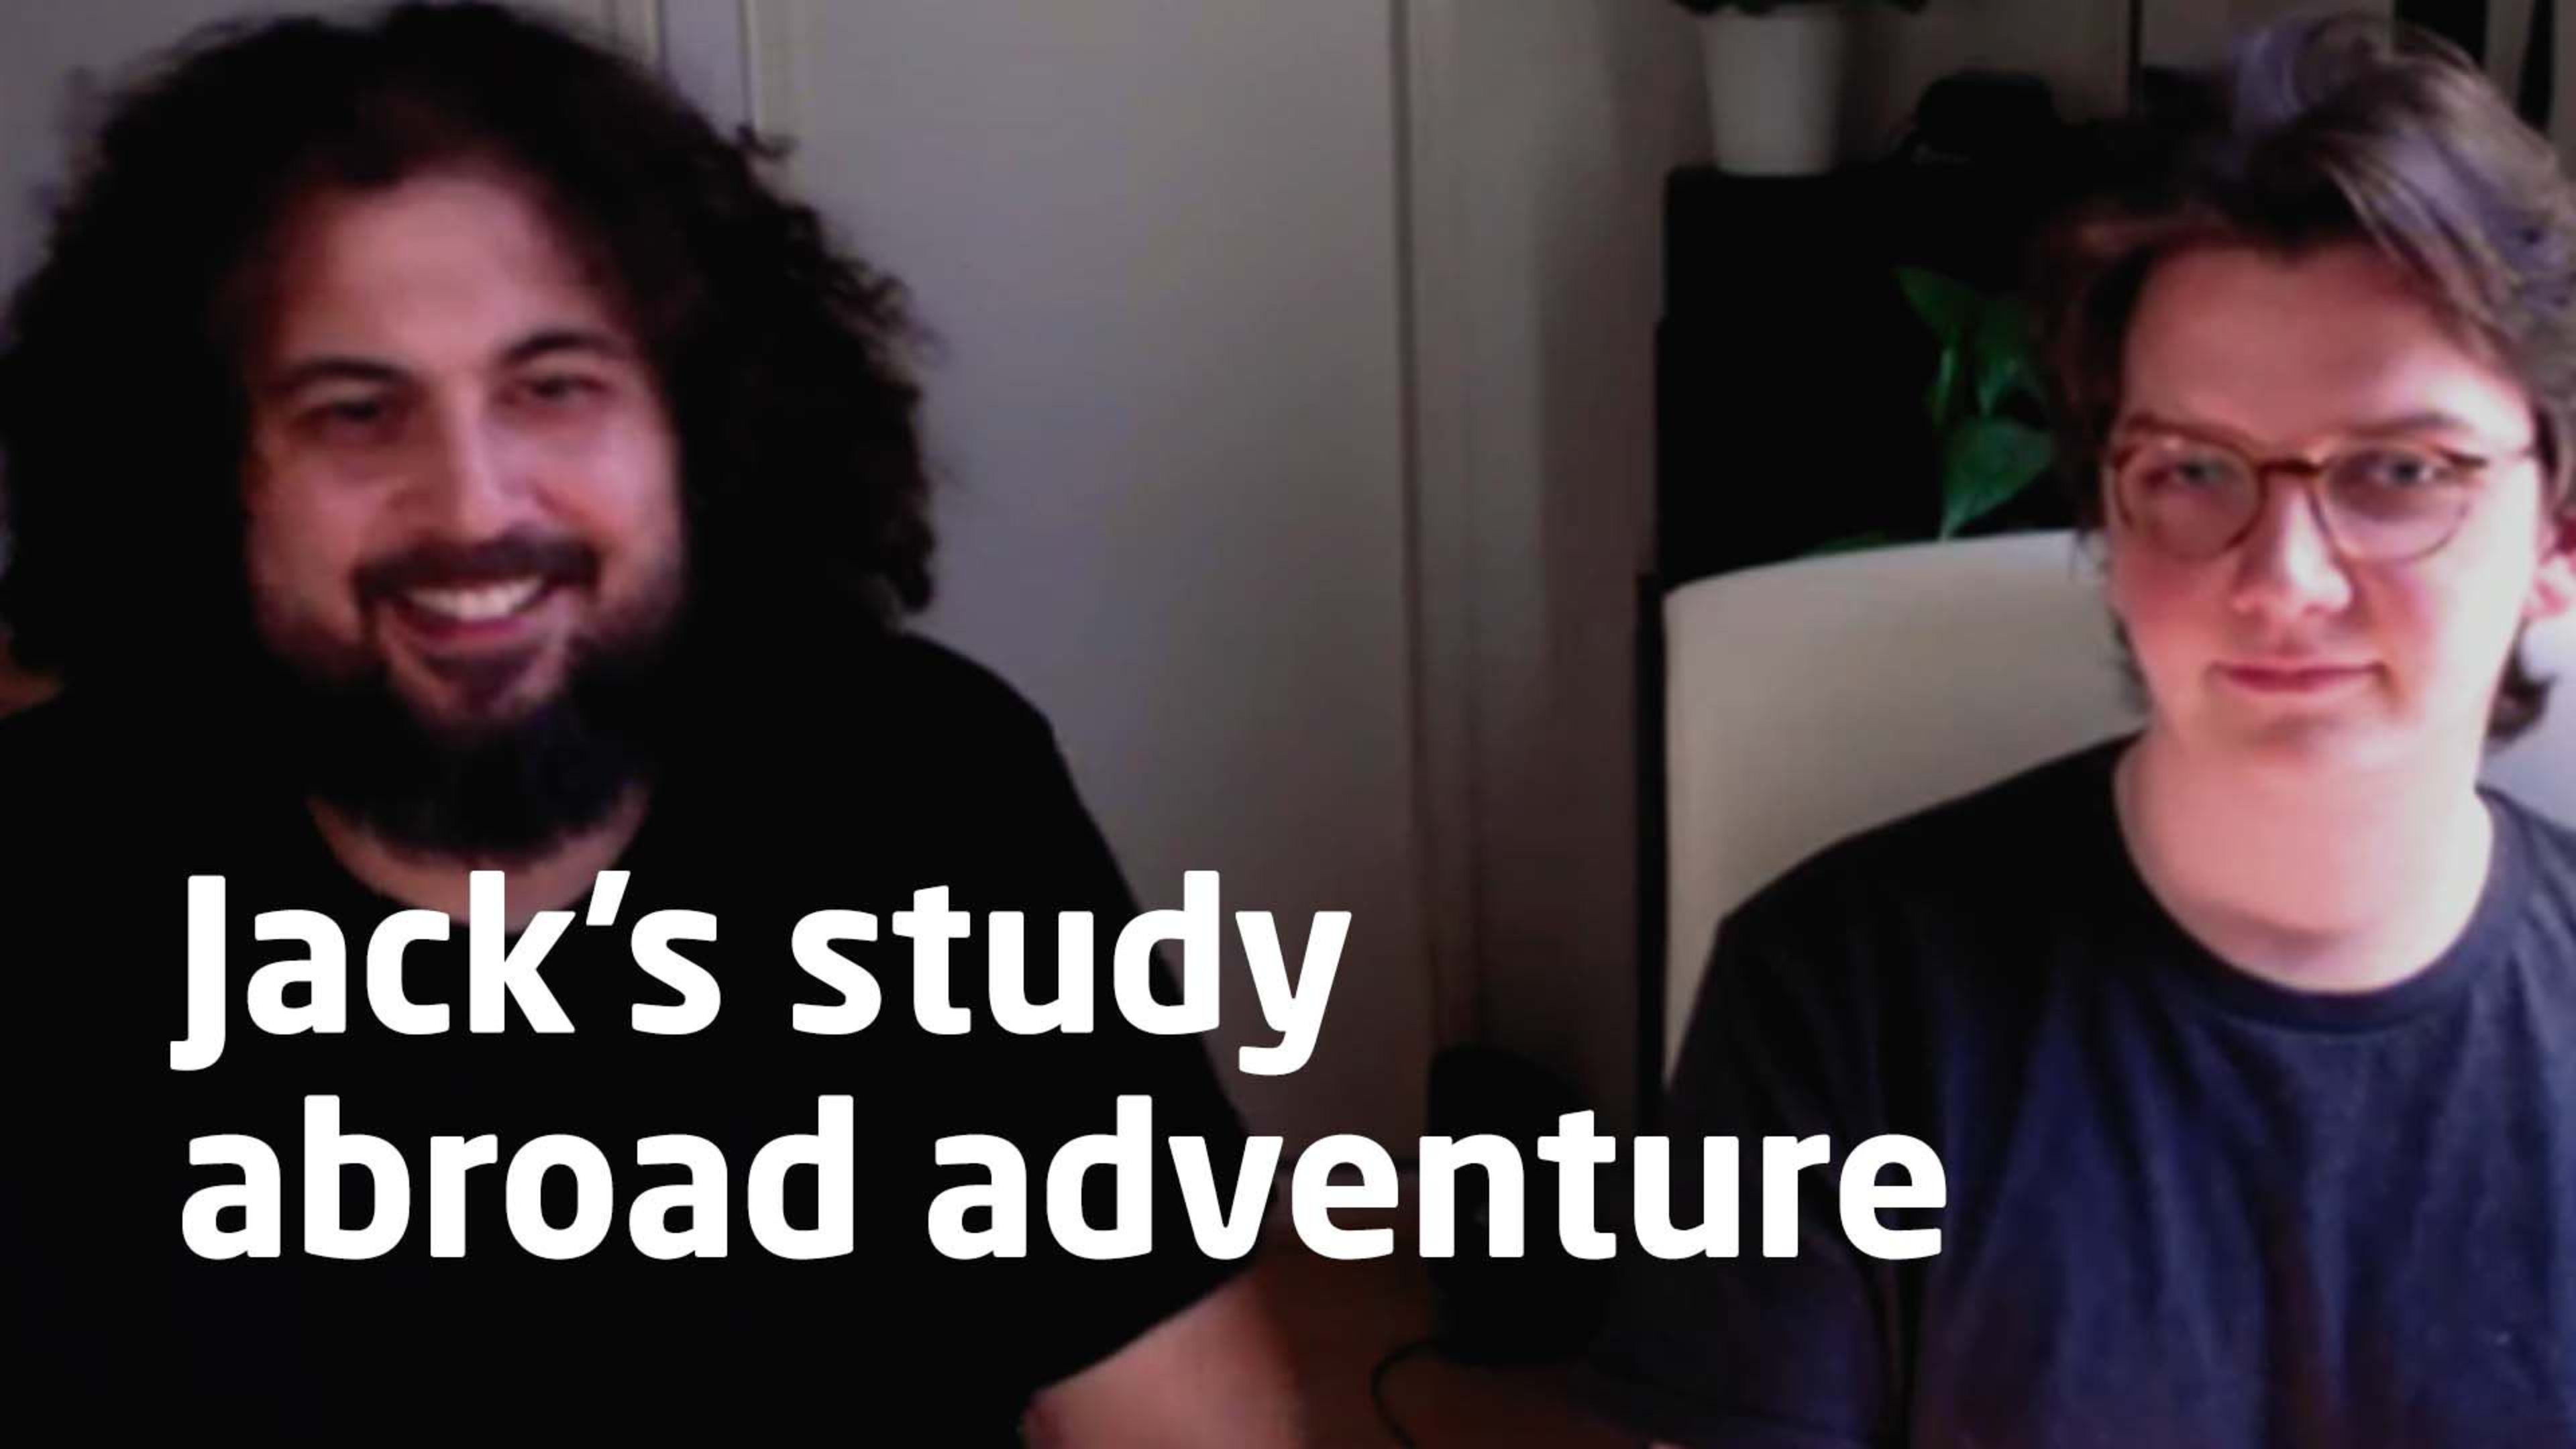 Jack's study abroad adventure